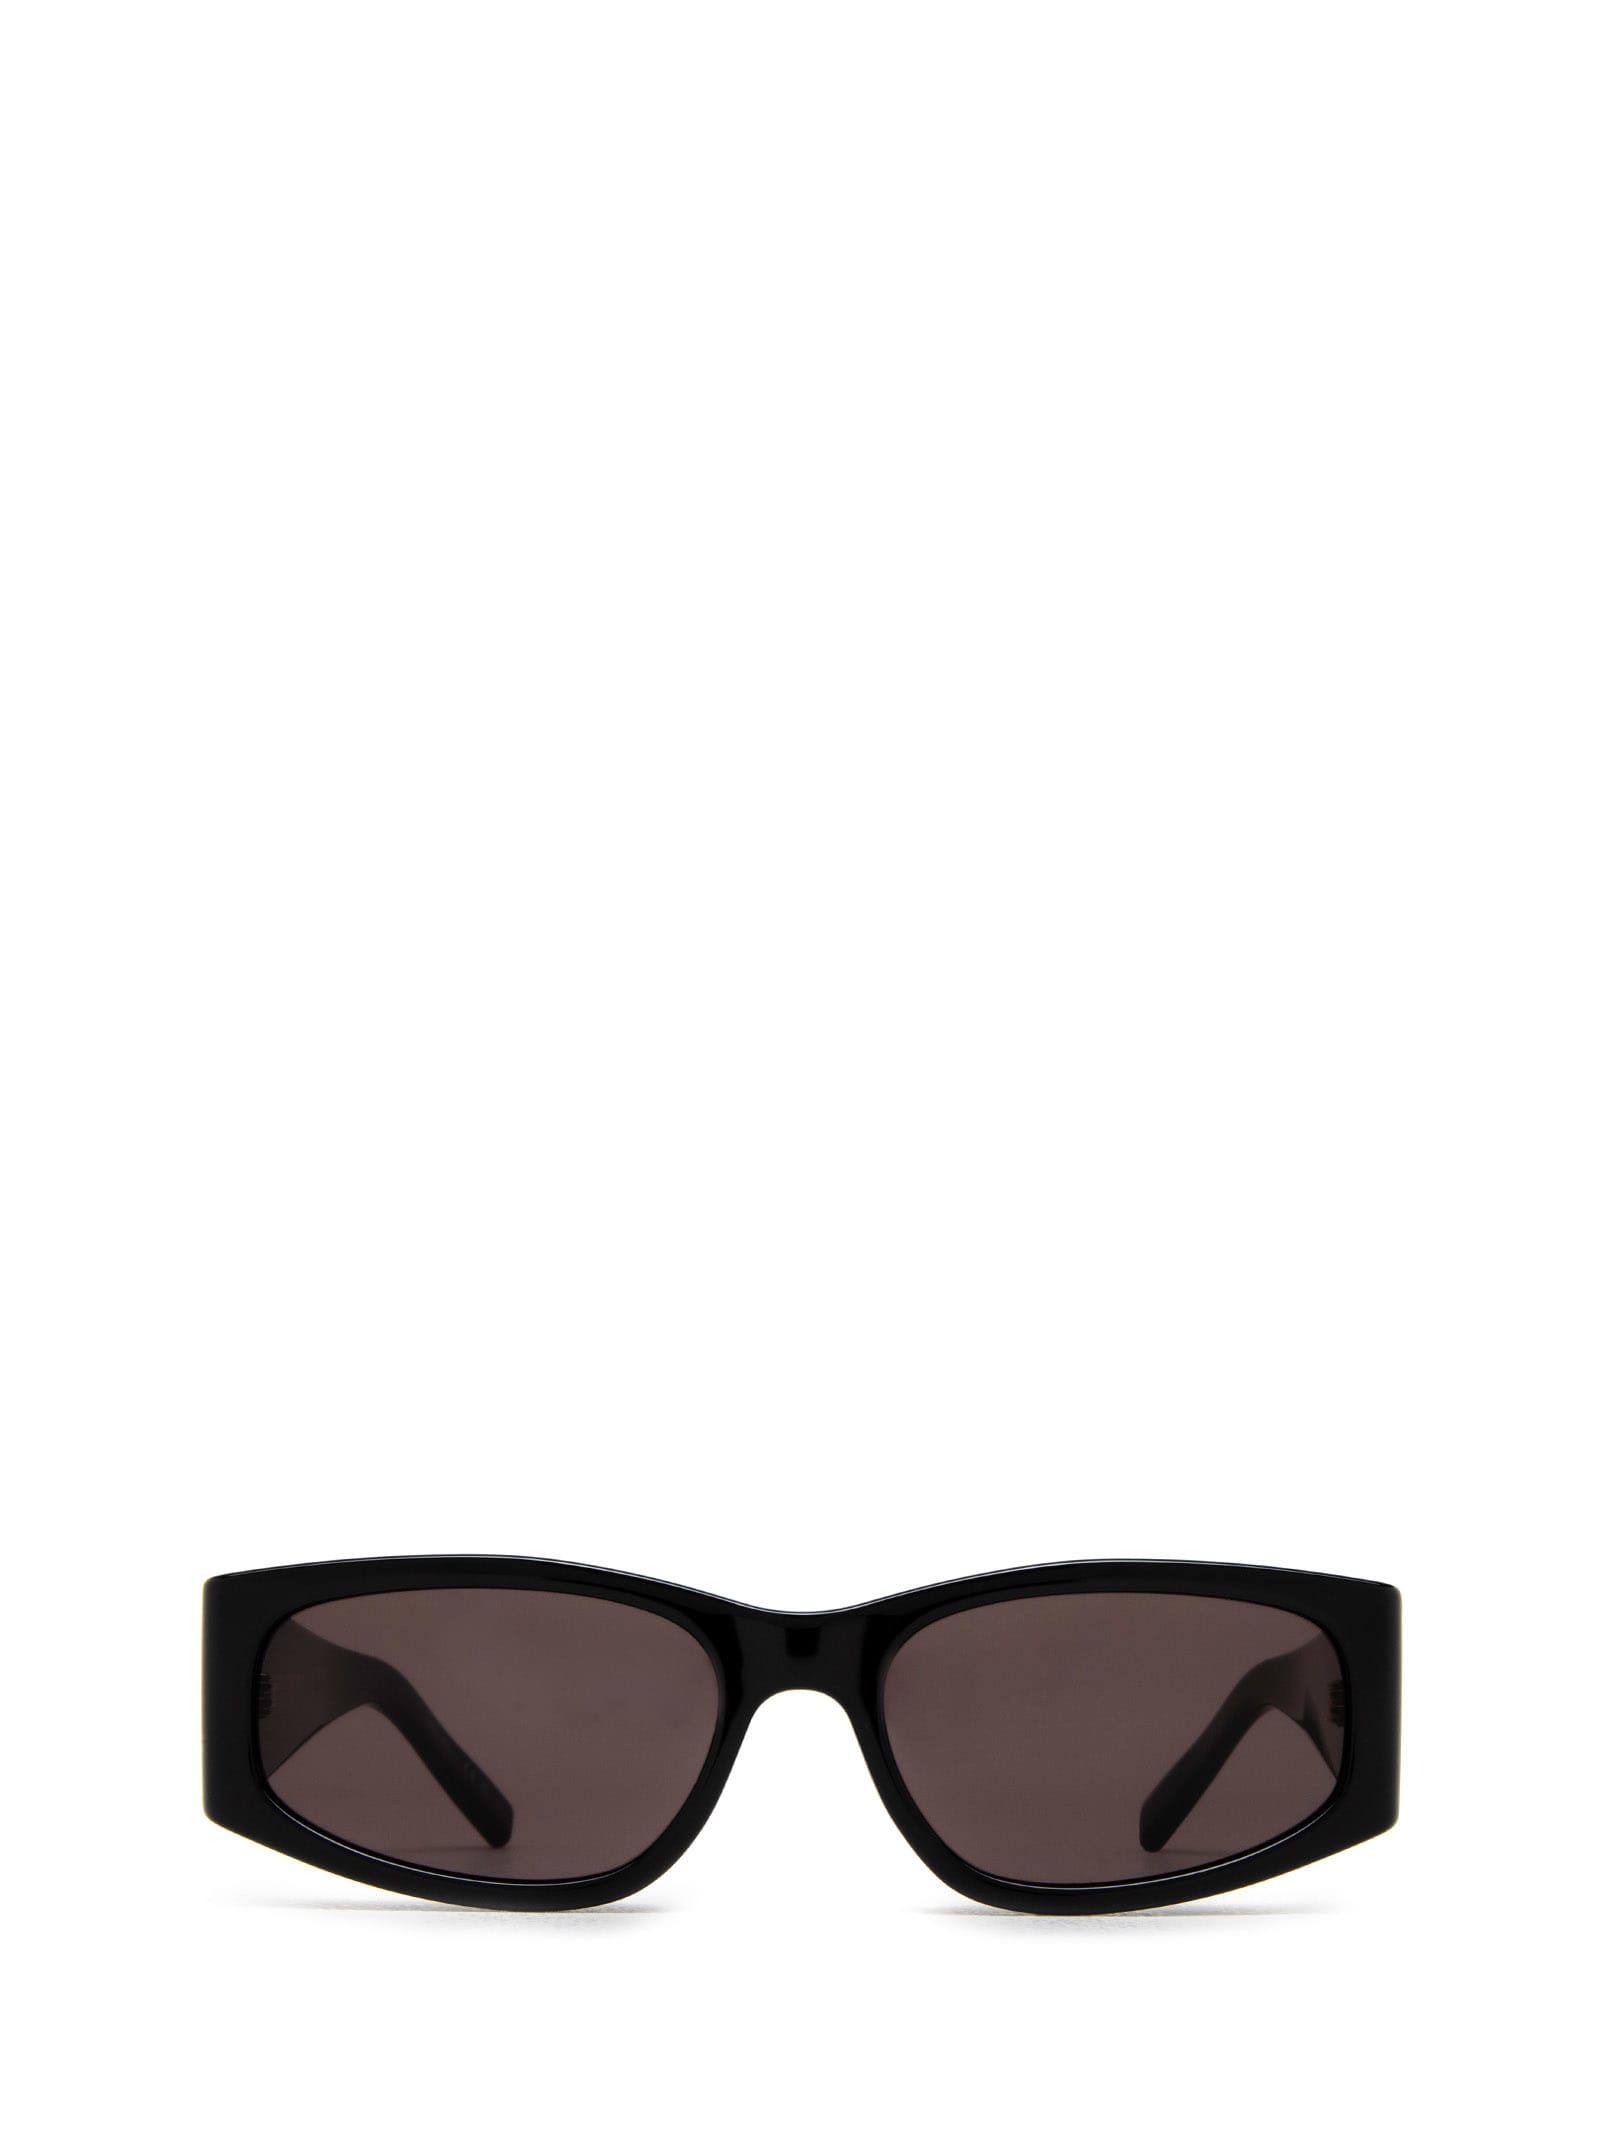 Sl 329 Black Sunglasses